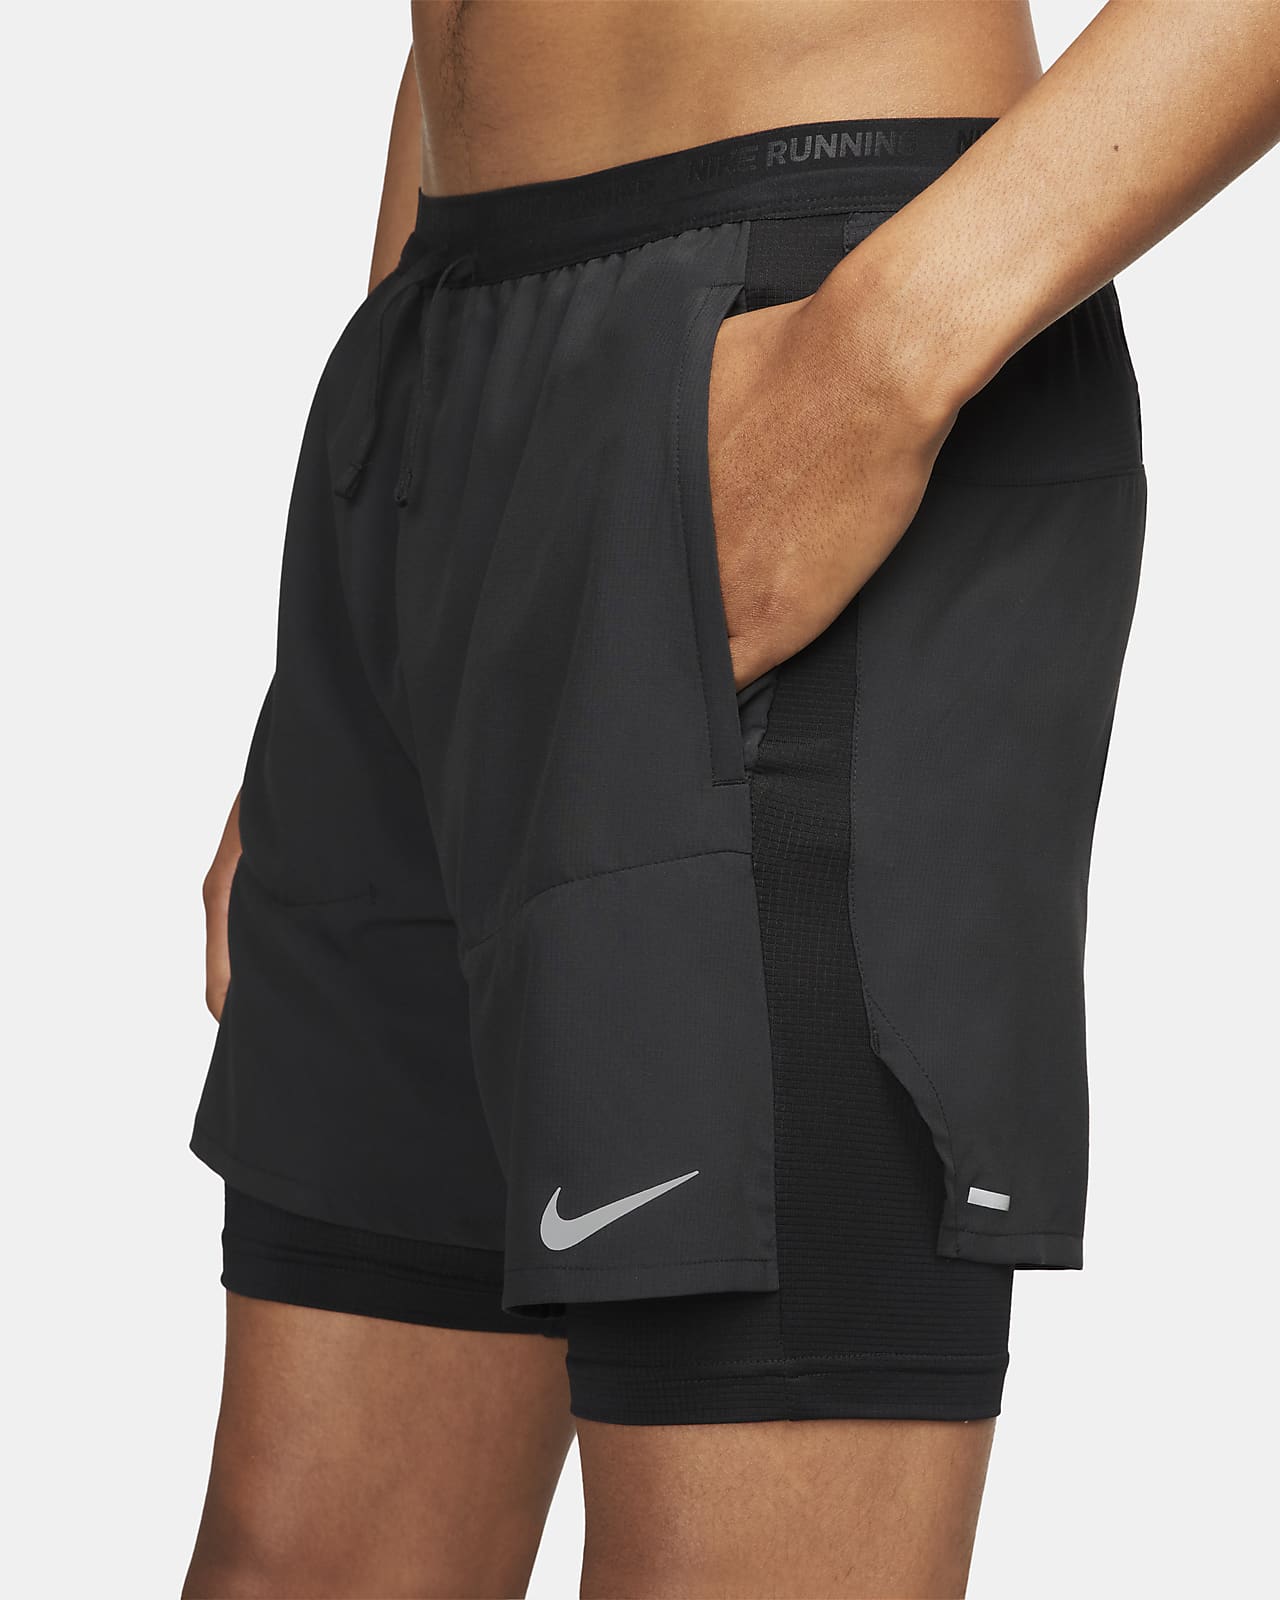 Fashion Compression Shorts Men Tights Polyester Spandex Quick Dry Training  Running Basketball Shorts Mens Sport Short